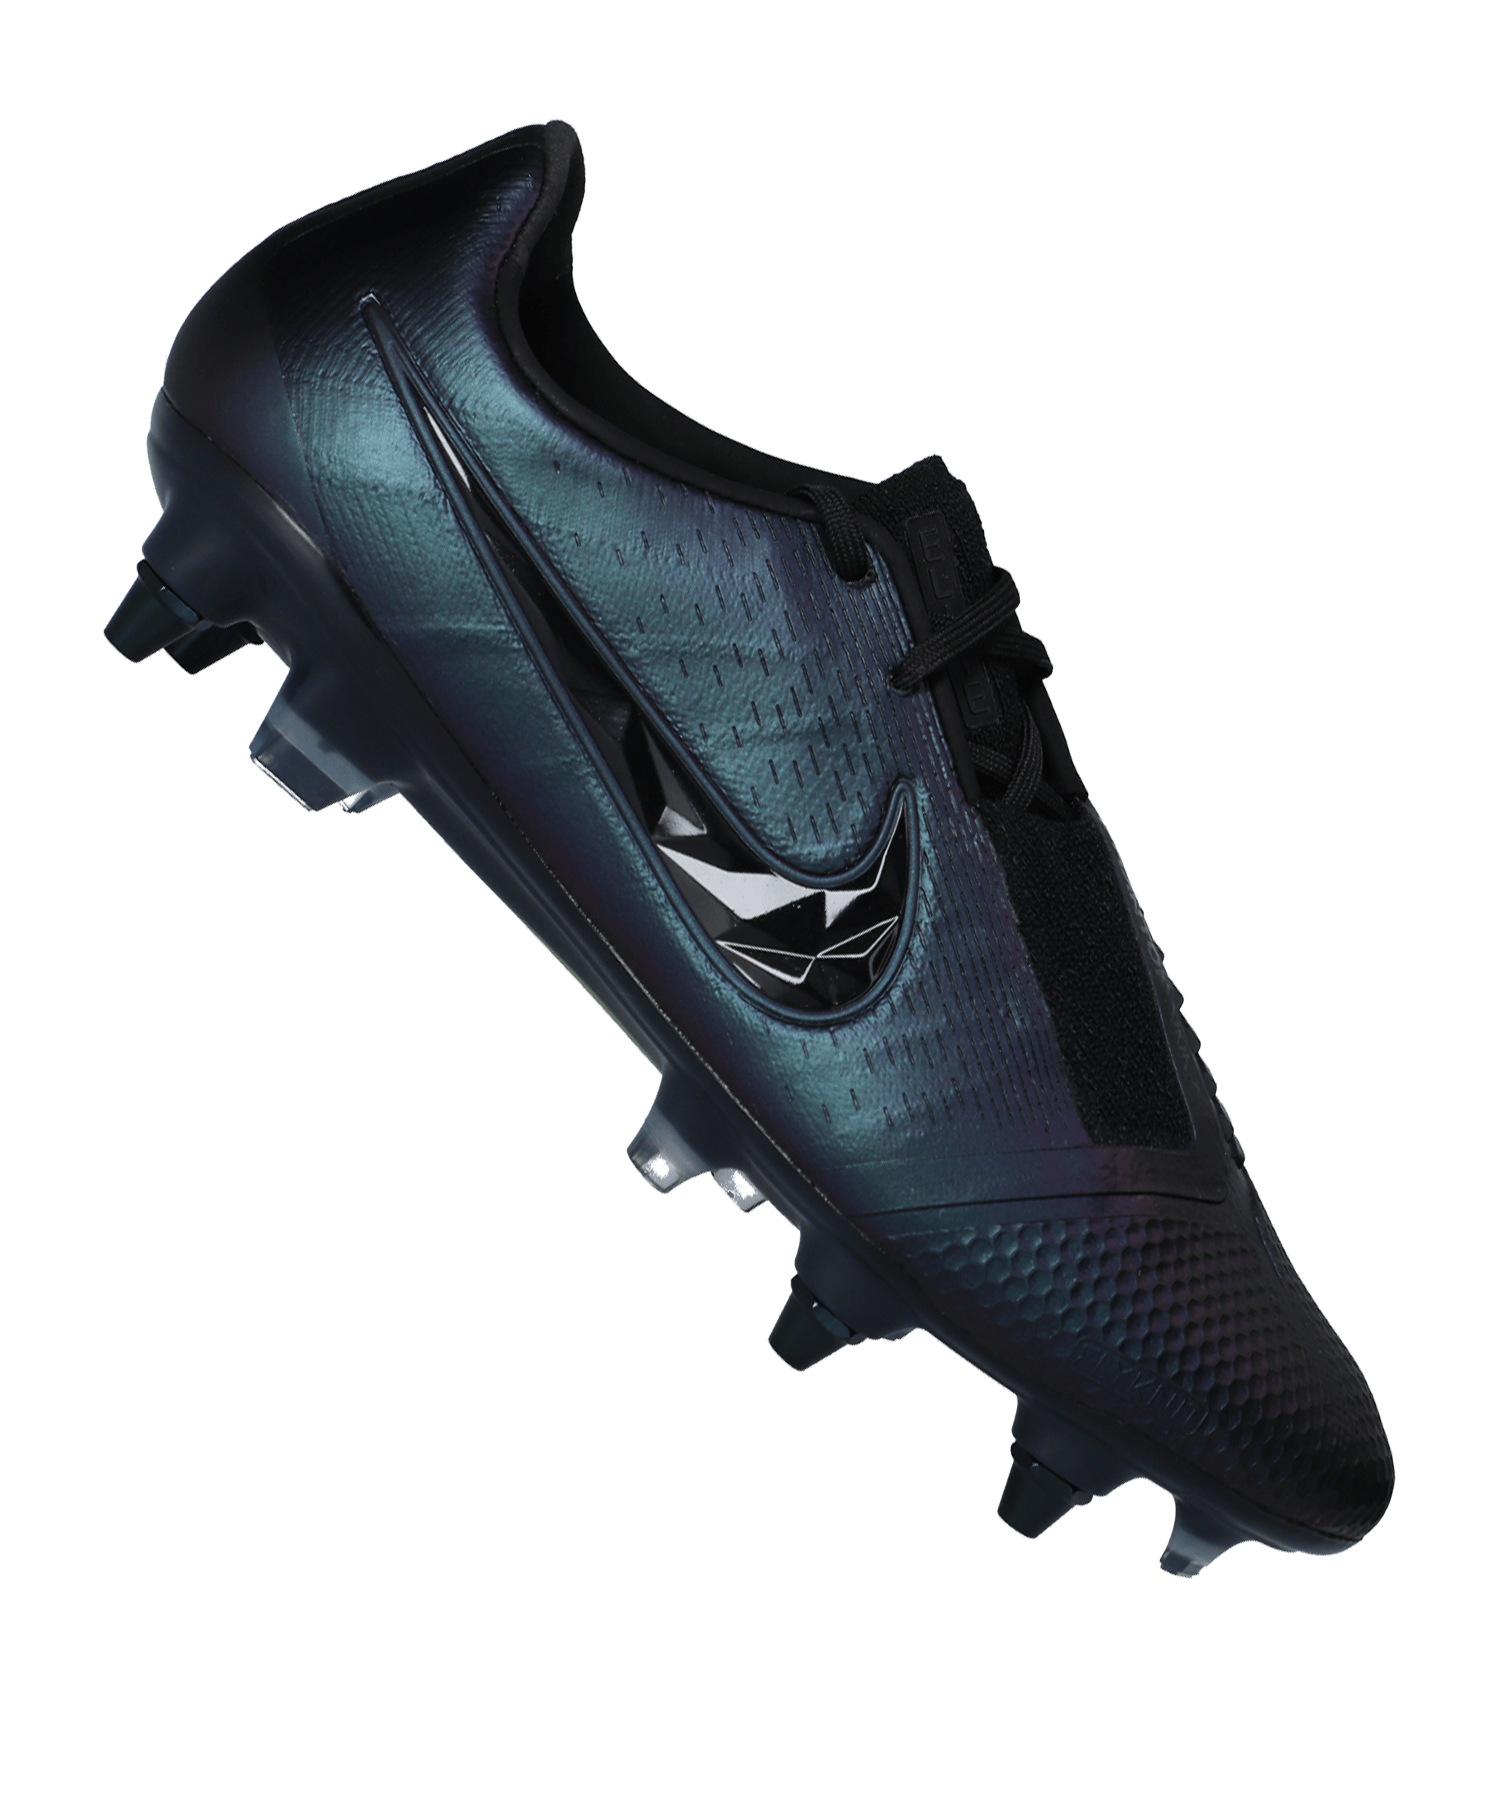 Nike Phantom Venom VNM Elite FG Soccer RUGBY Cleats Black .